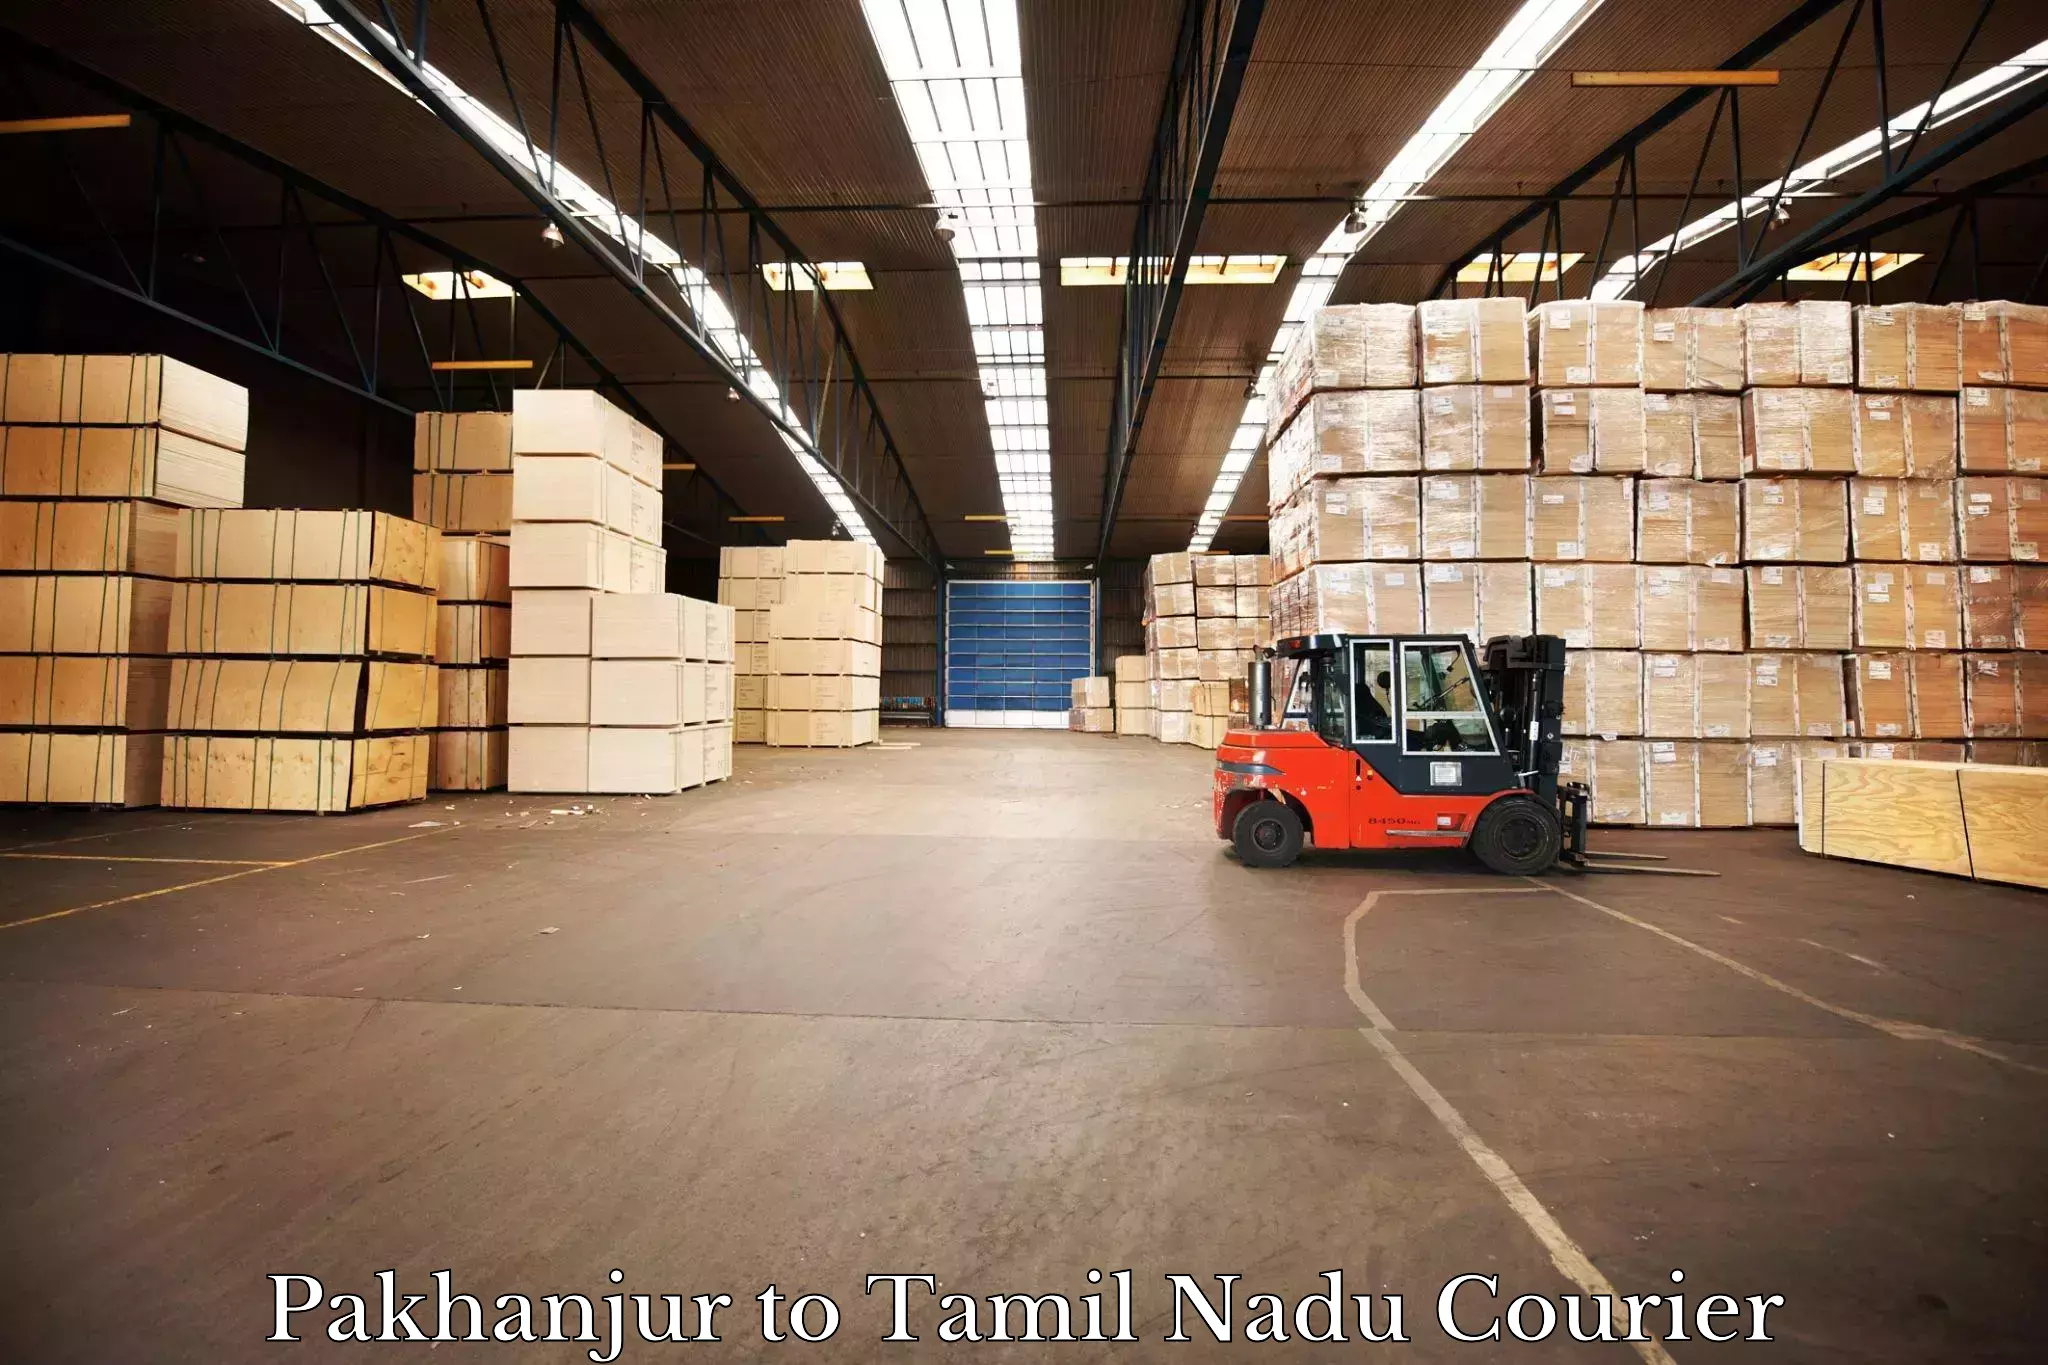 Digital courier platforms Pakhanjur to Tamil Nadu